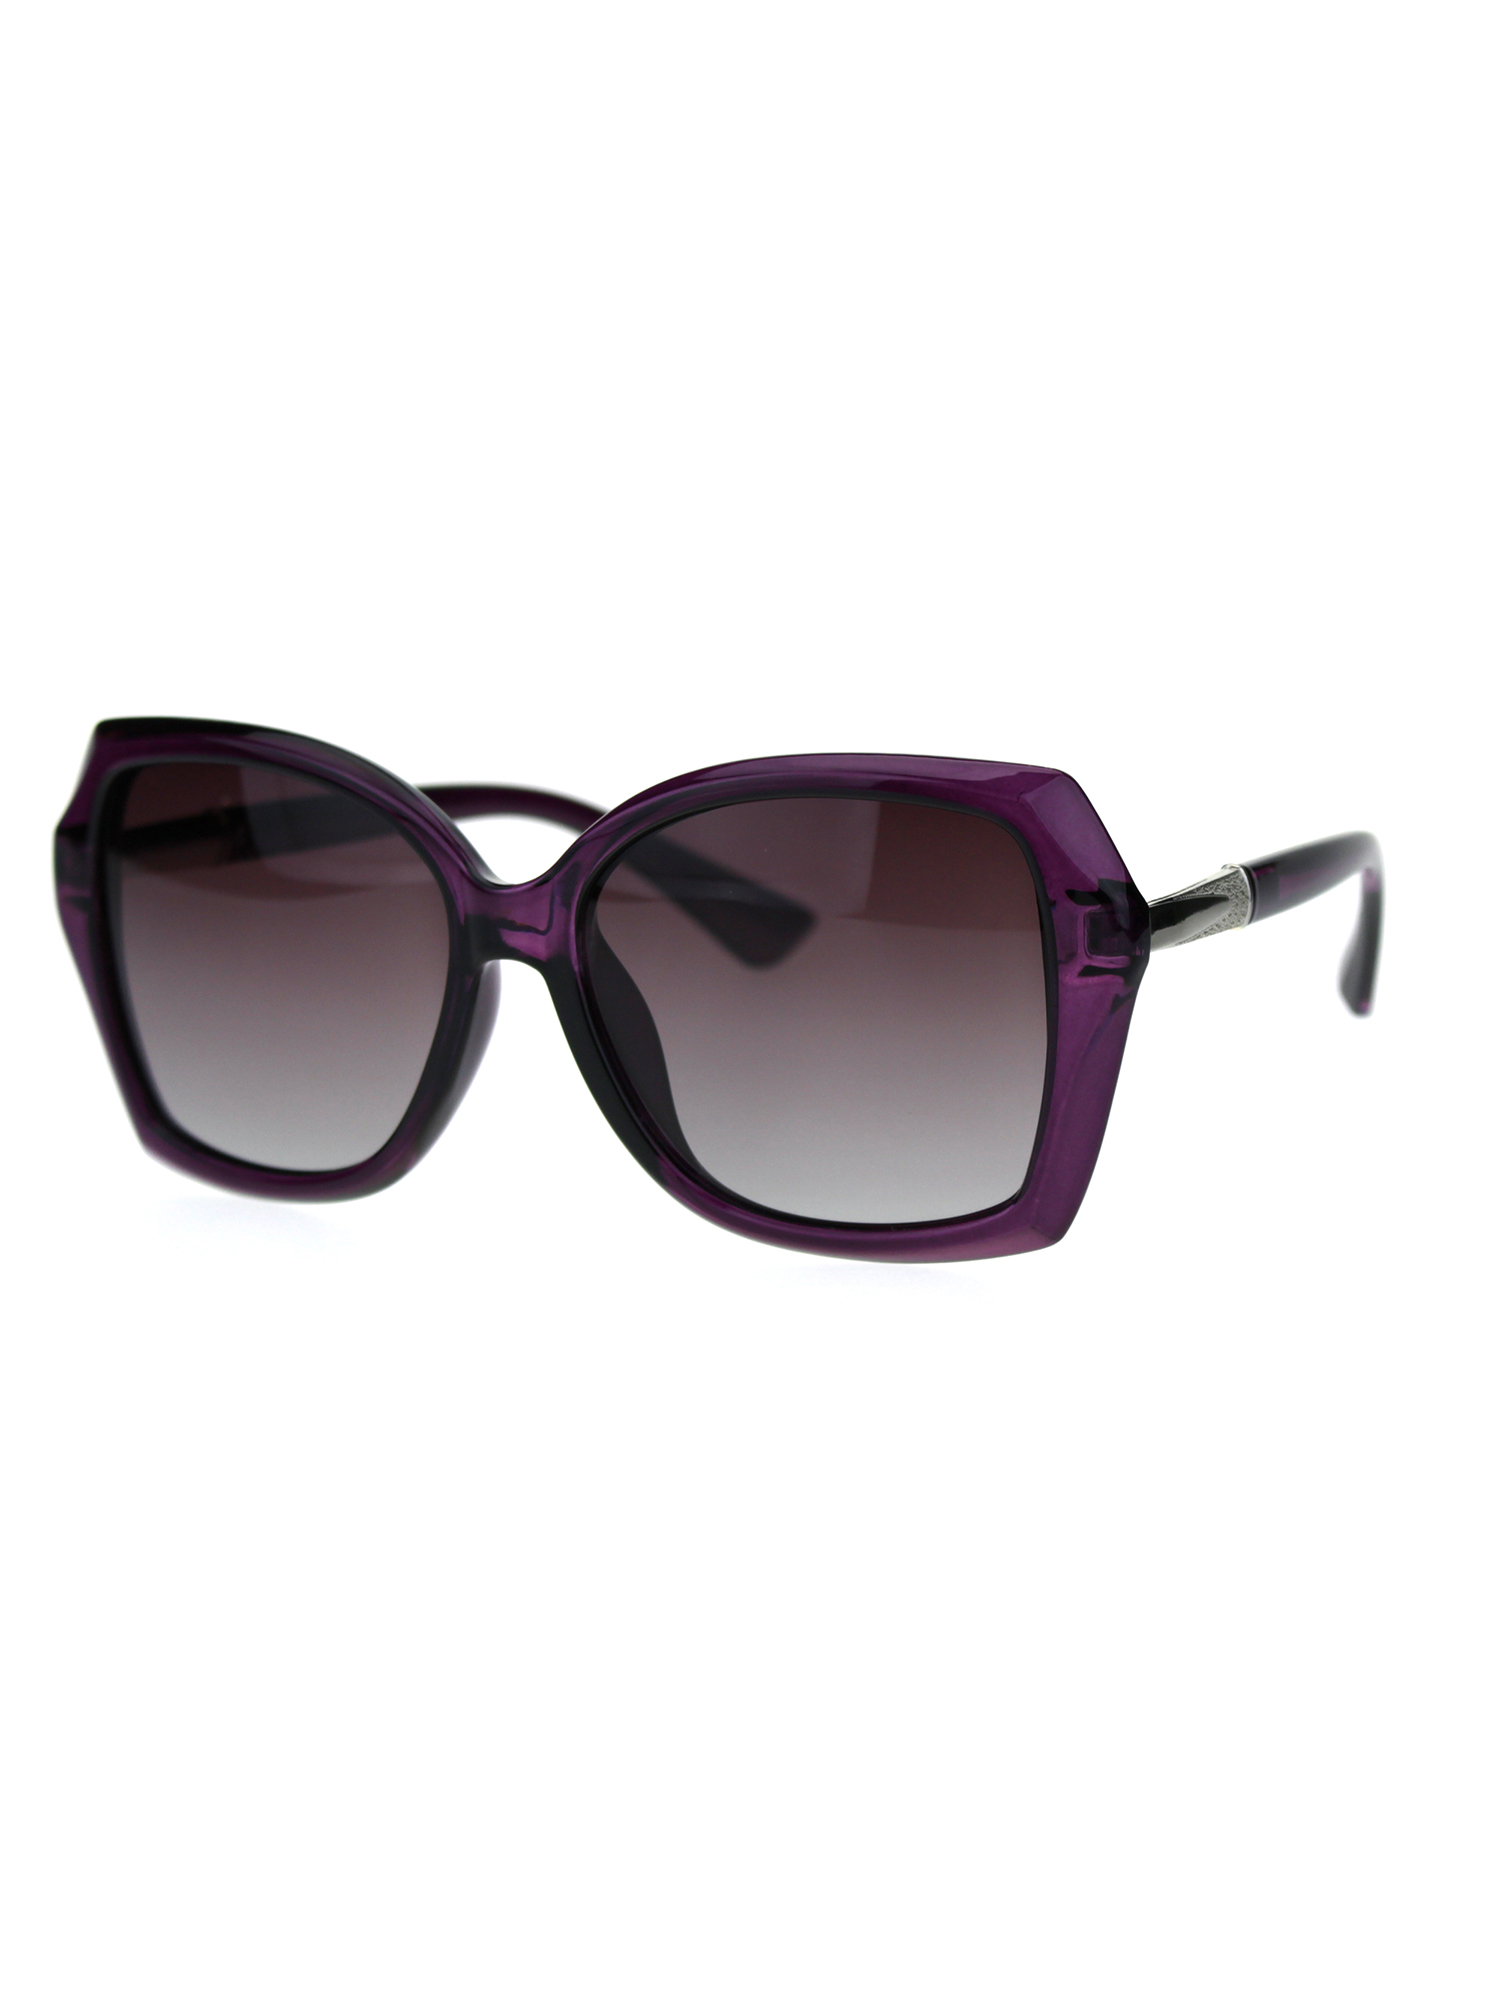 Womens CR39 Polarized Square Plastic Butterfly Designer Fashion Sunglasses All Purple - image 1 of 4